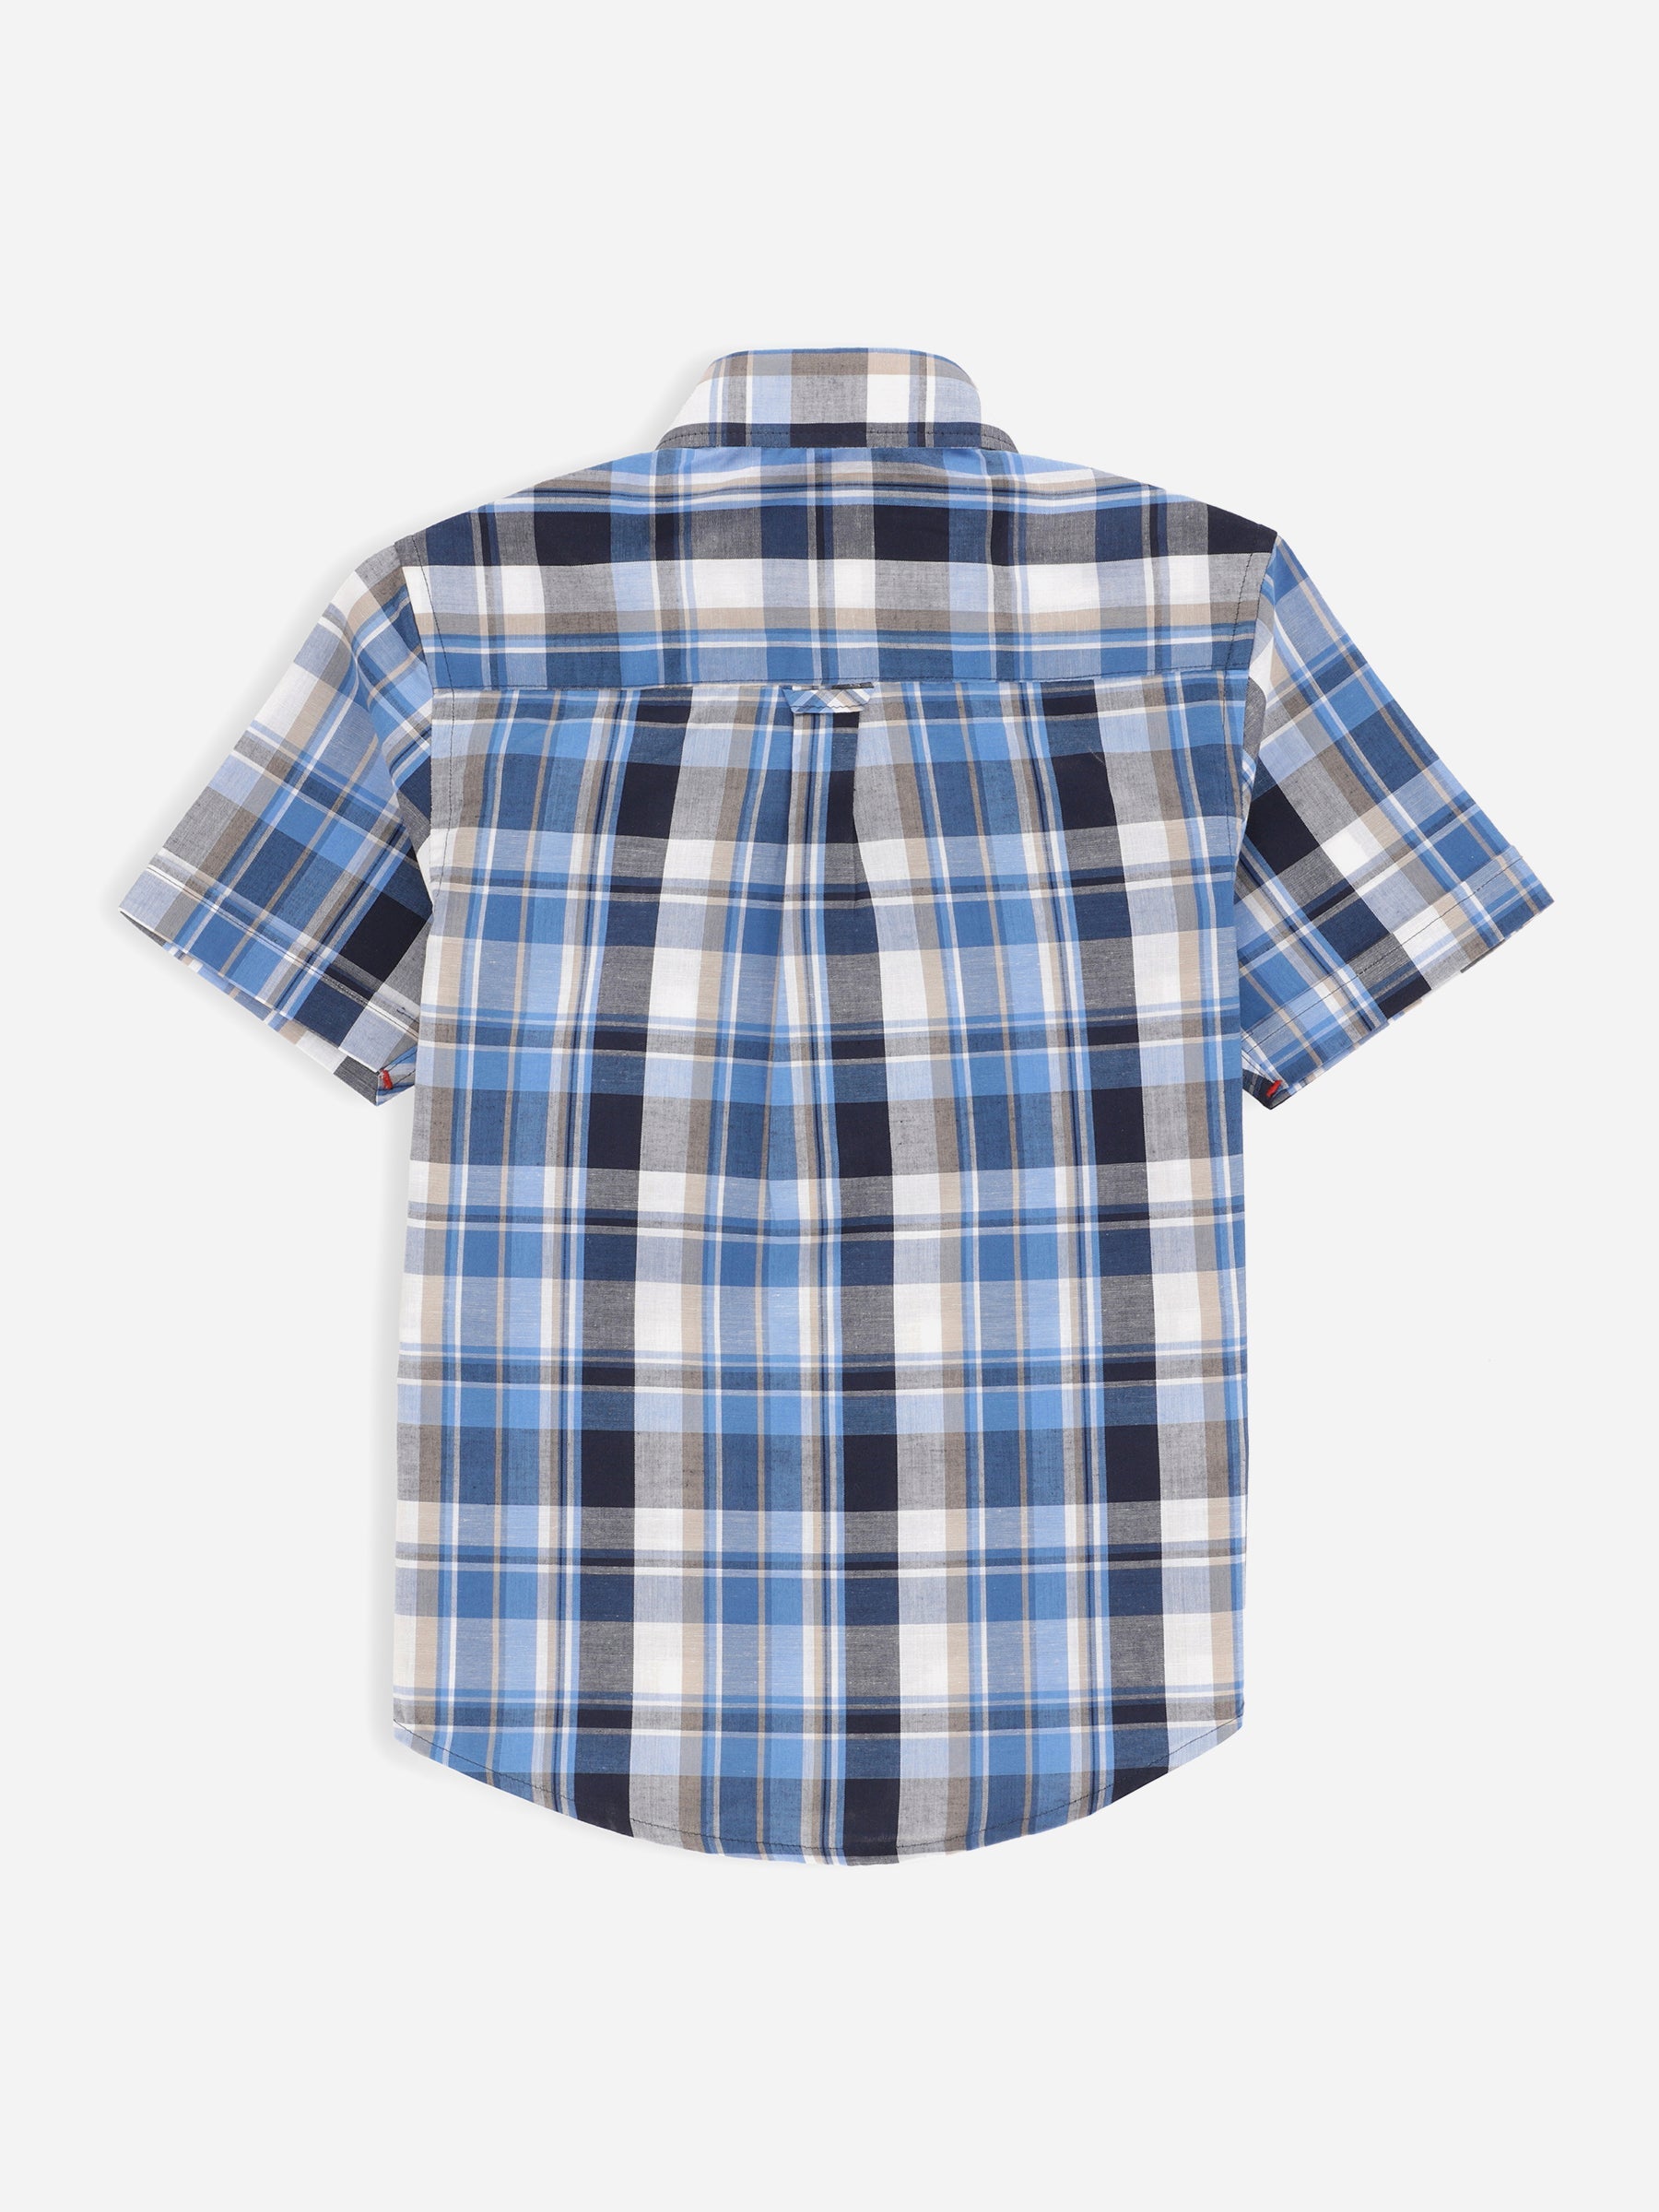 Black & Blue Half Sleeve Casual Checkered Shirt Brumano Pakistan